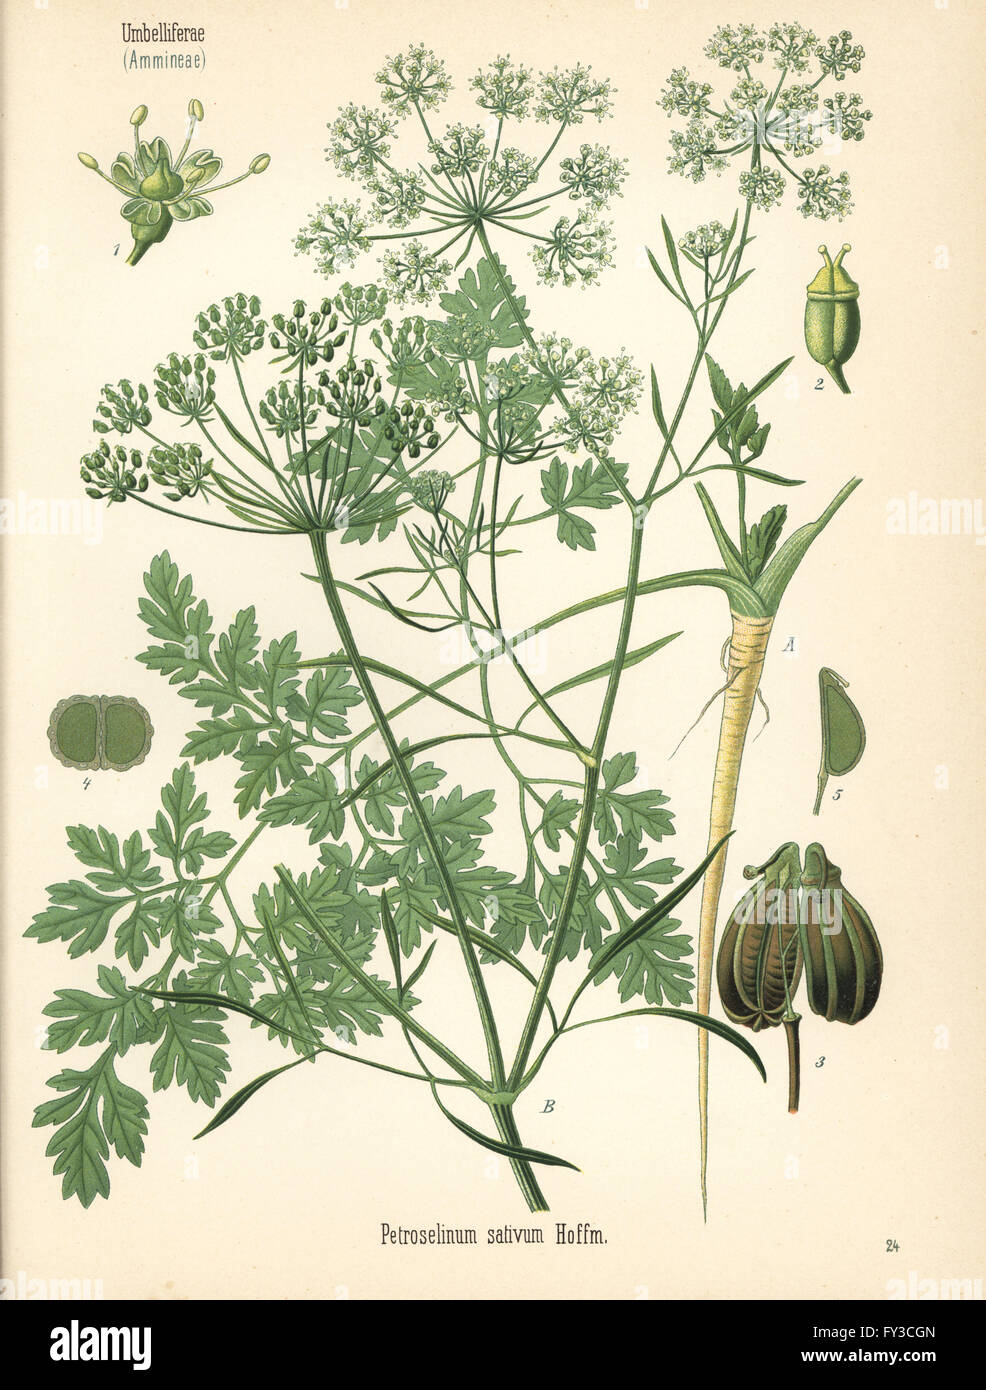 Parsley, Petroselinum crispum (Petroselinum sativum). Chromolithograph after a botanical illustration from Hermann Adolph Koehler's Medicinal Plants, edited by Gustav Pabst, Koehler, Germany, 1887. Stock Photo